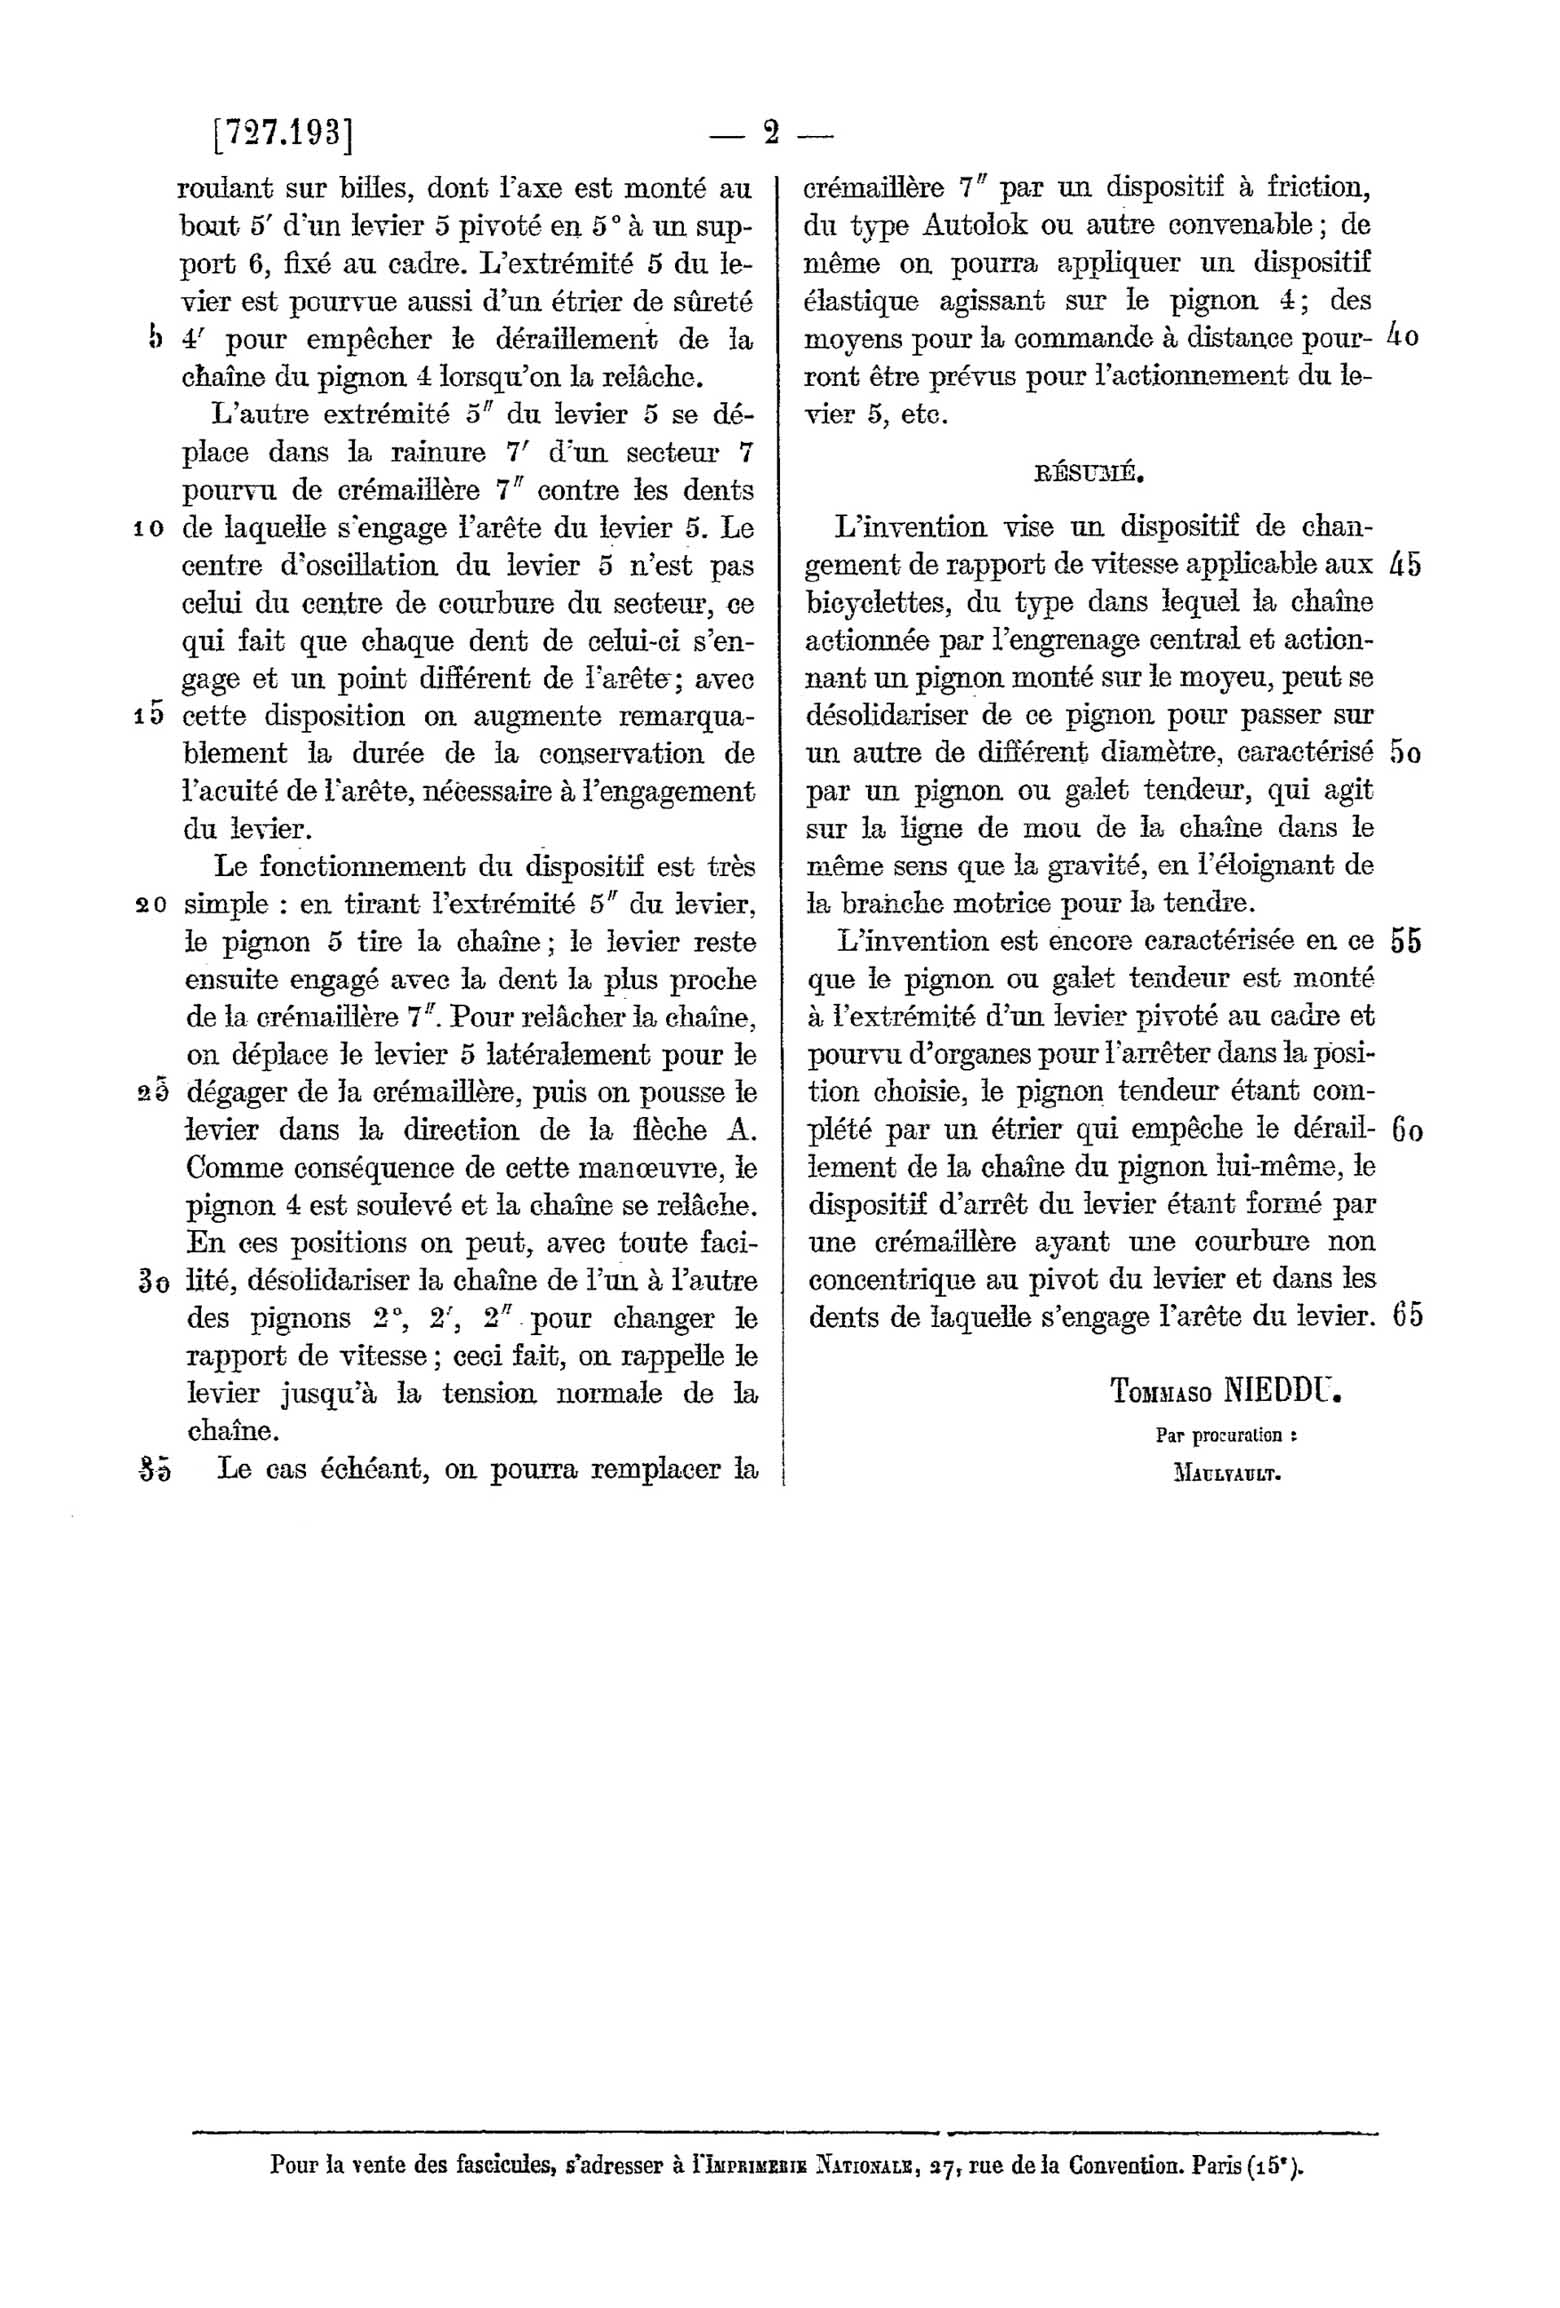 French Patent 727,193 - Vittoria scan 2 main image